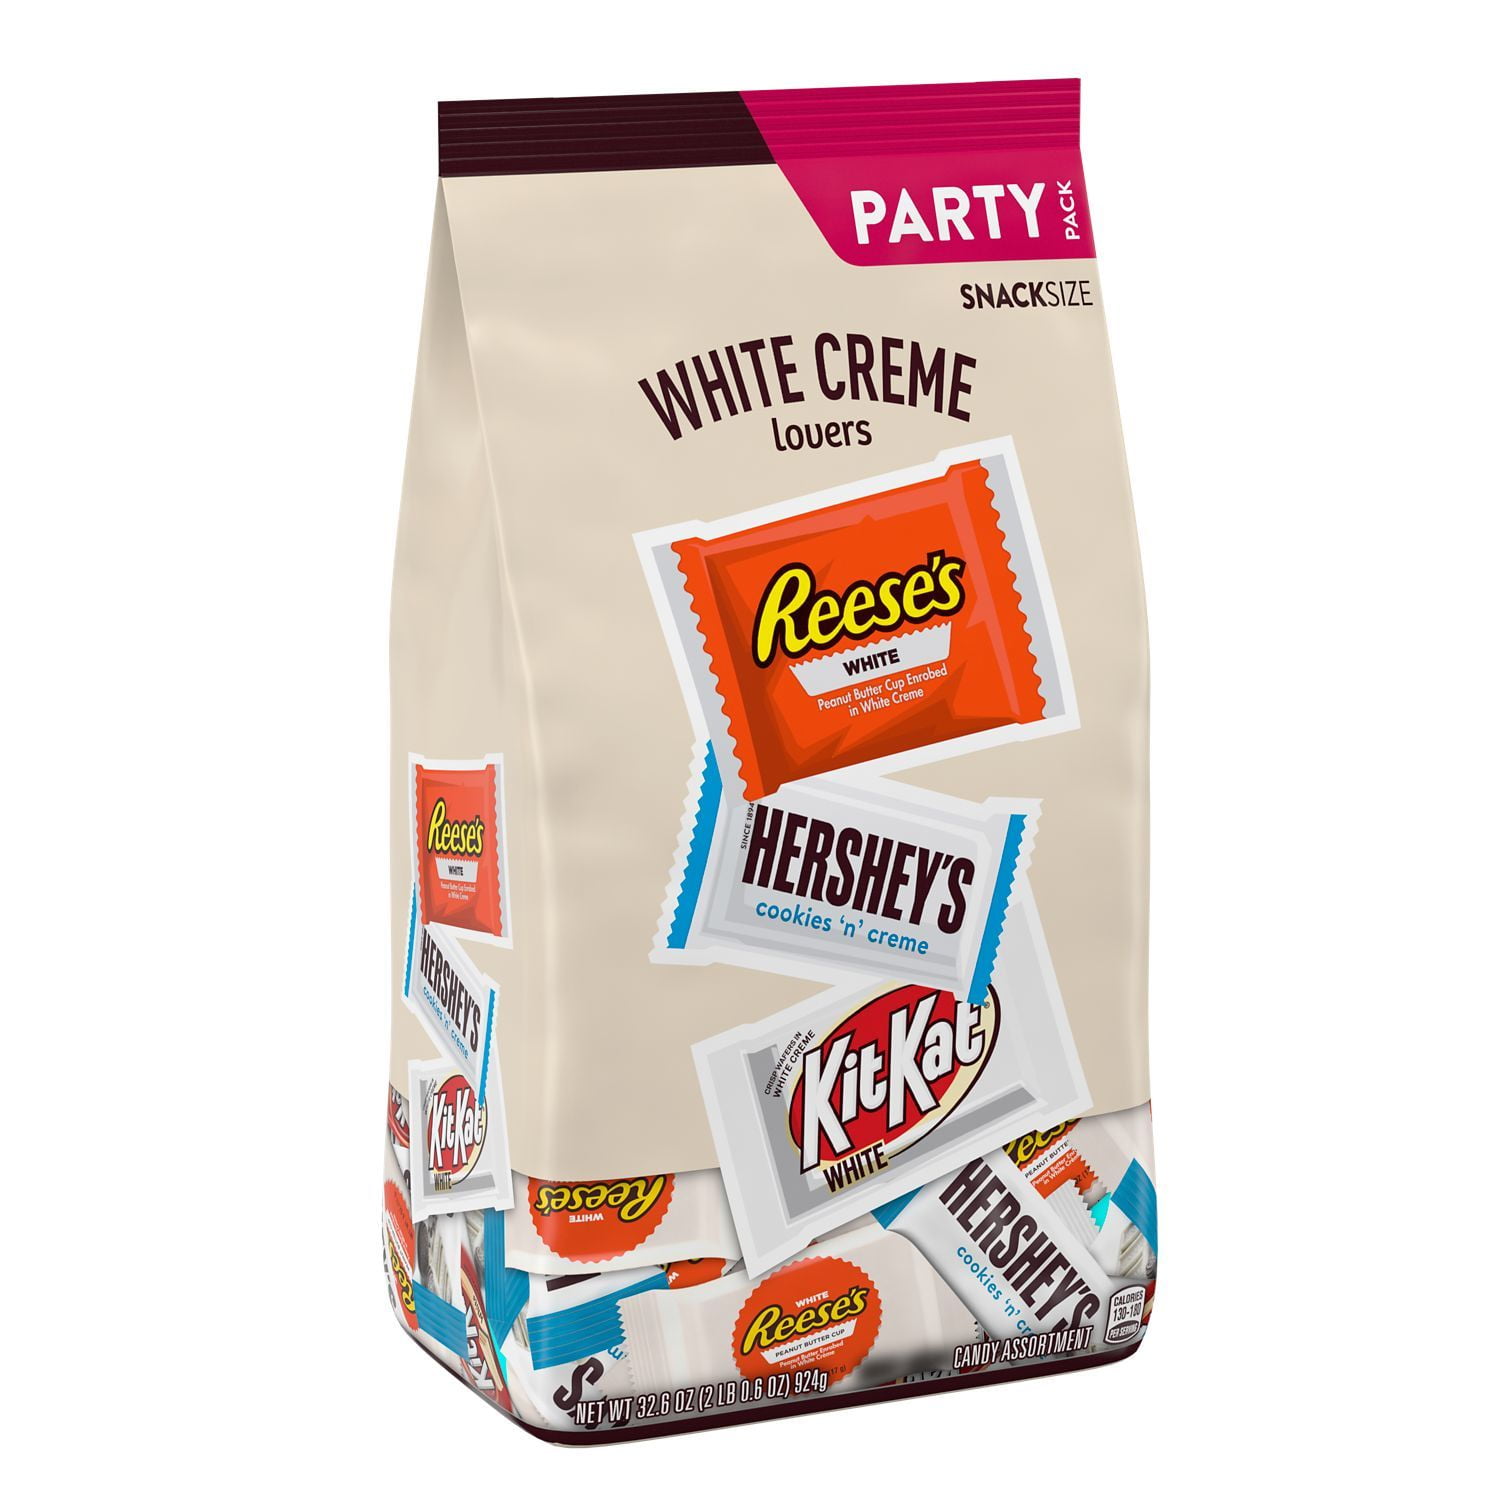  HERSHEY'S KIT KAT Milk Chocolate Wafer Snack Size, Christmas  Candy Bag, 32 oz : Hershey's: CDs & Vinyl